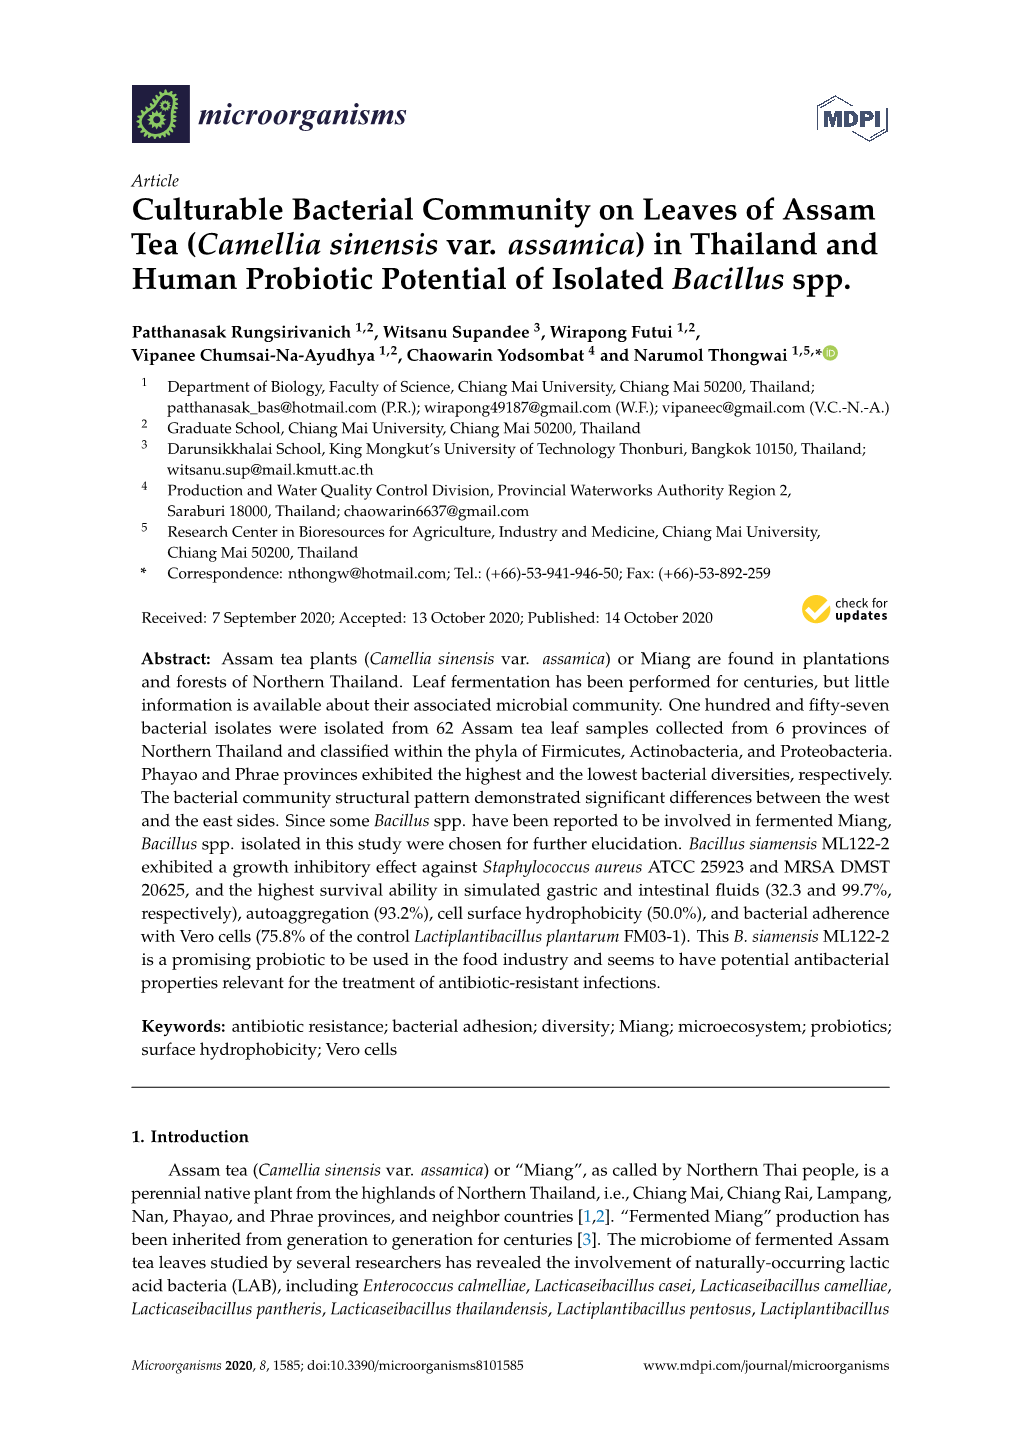 Culturable Bacterial Community on Leaves of Assam Tea (Camellia Sinensis Var